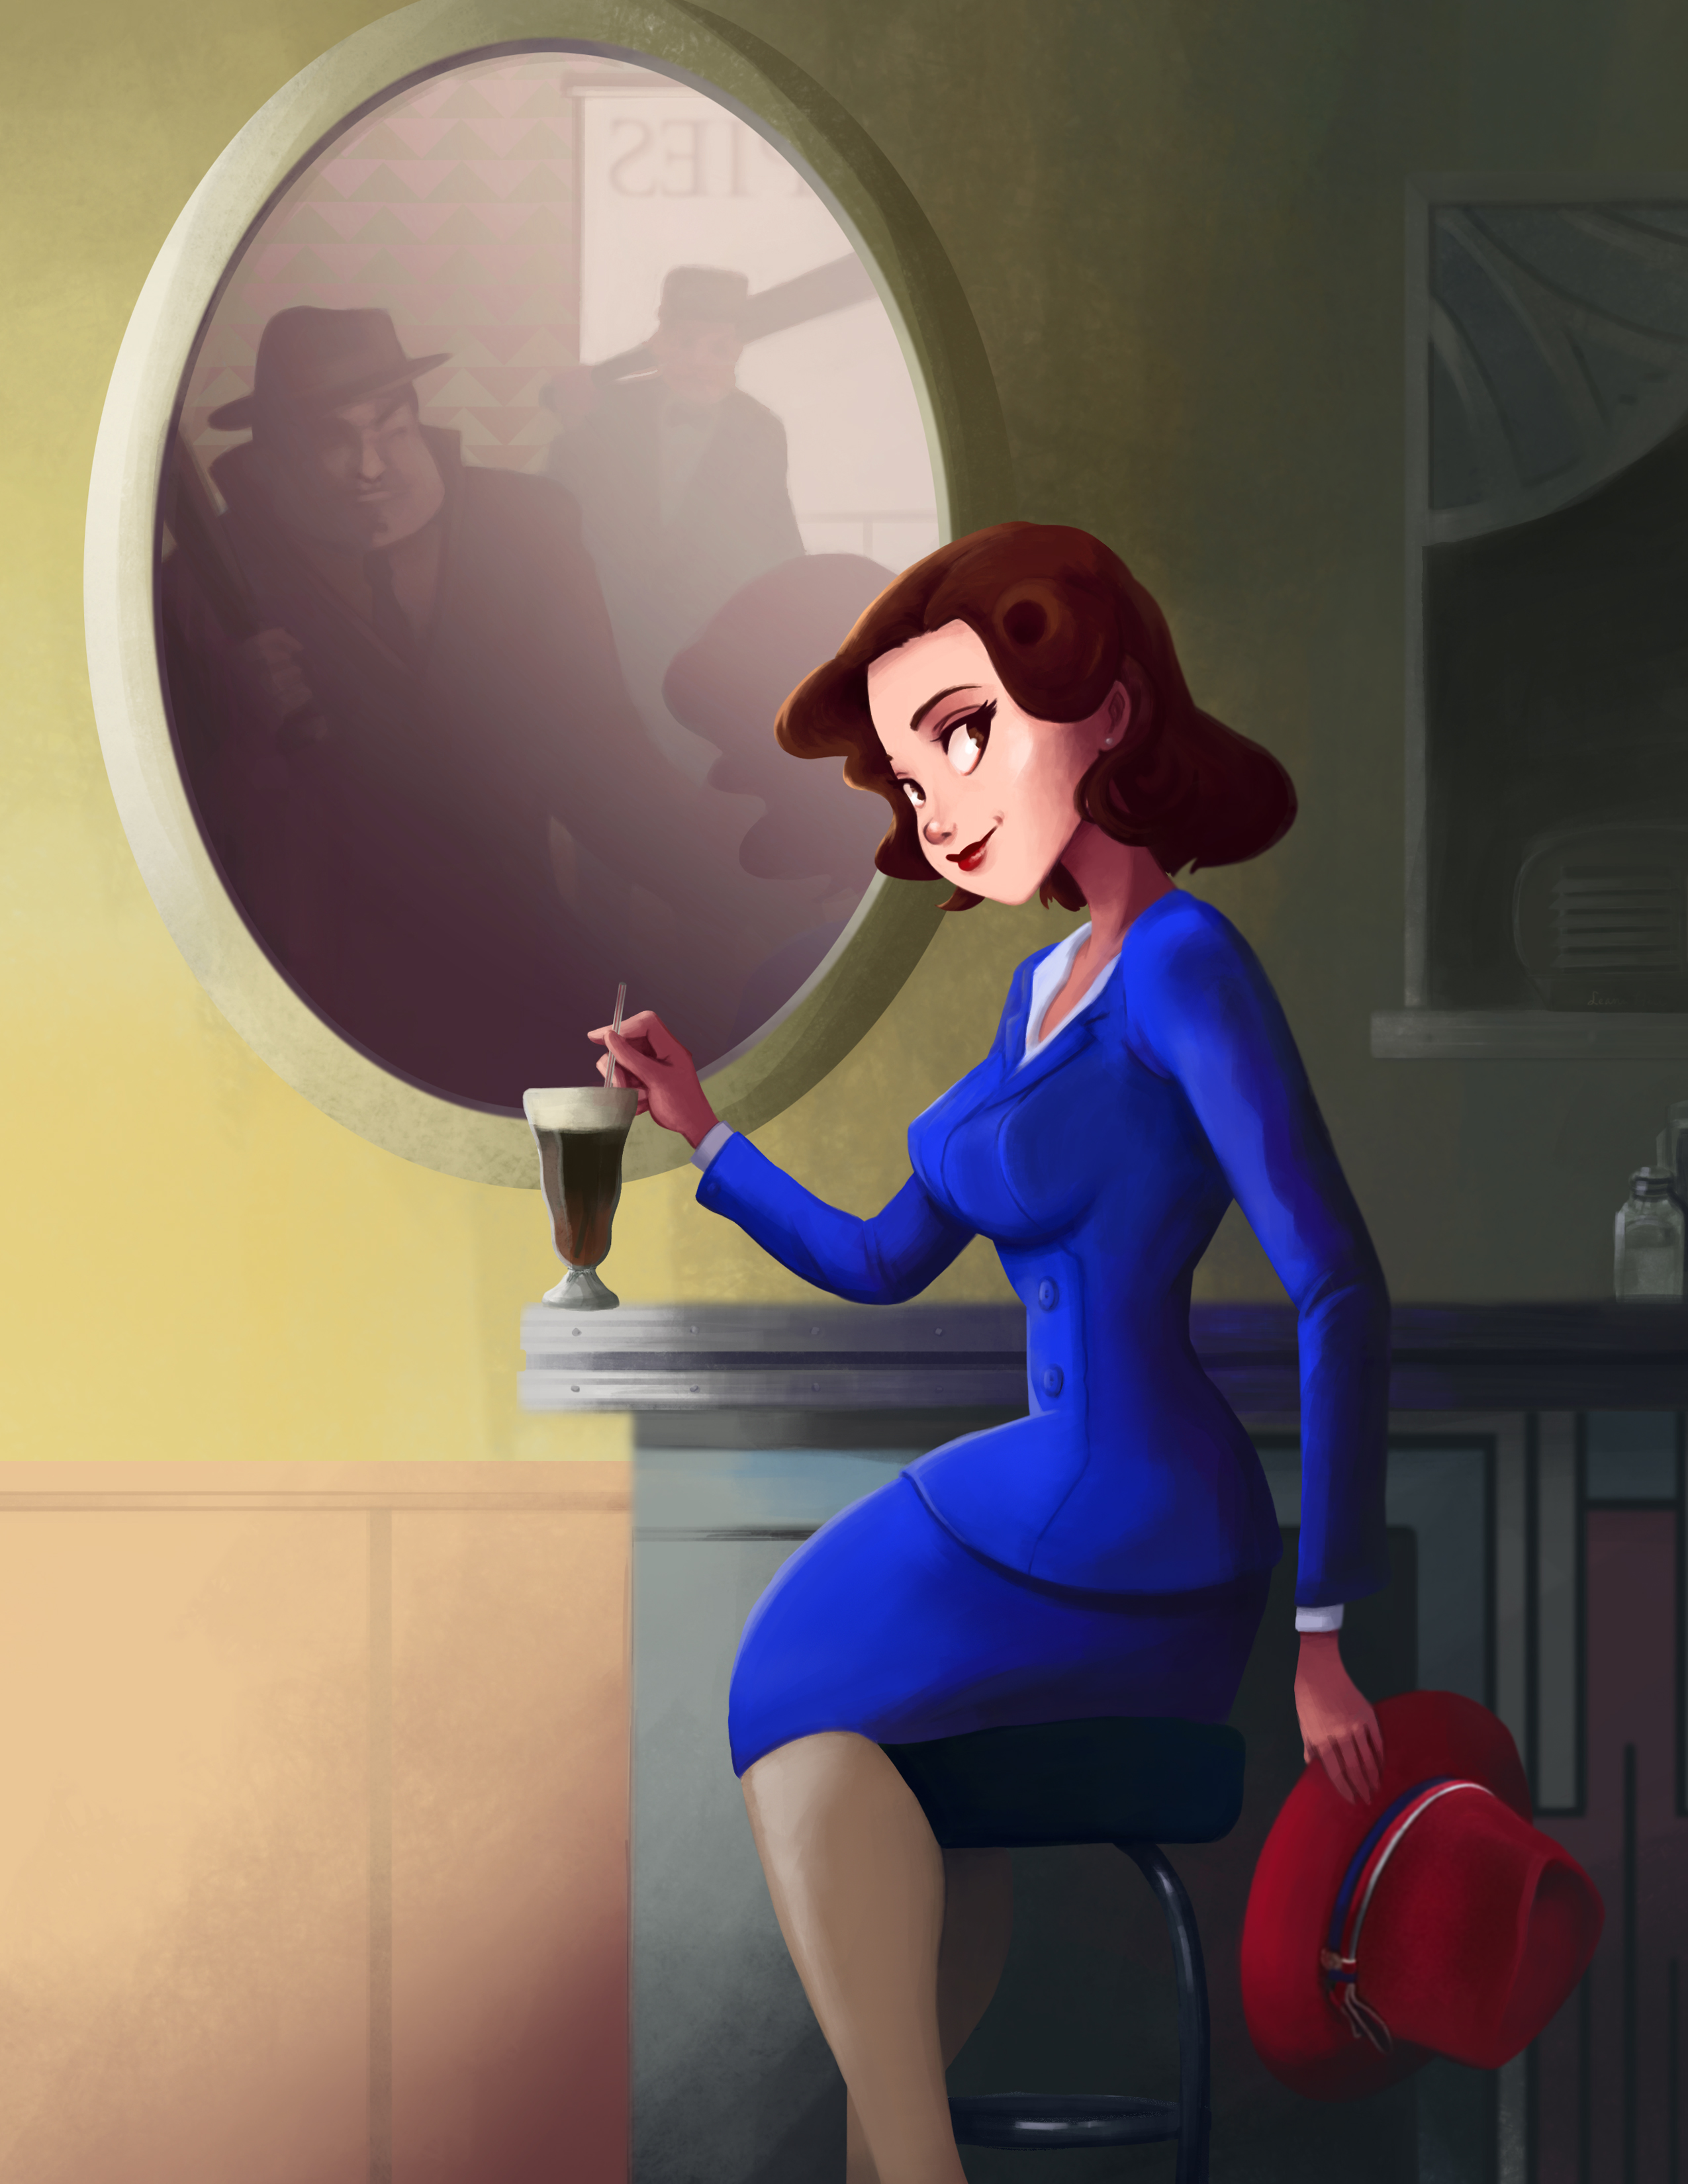 Leann Hill Art - Agent Carter (Large)